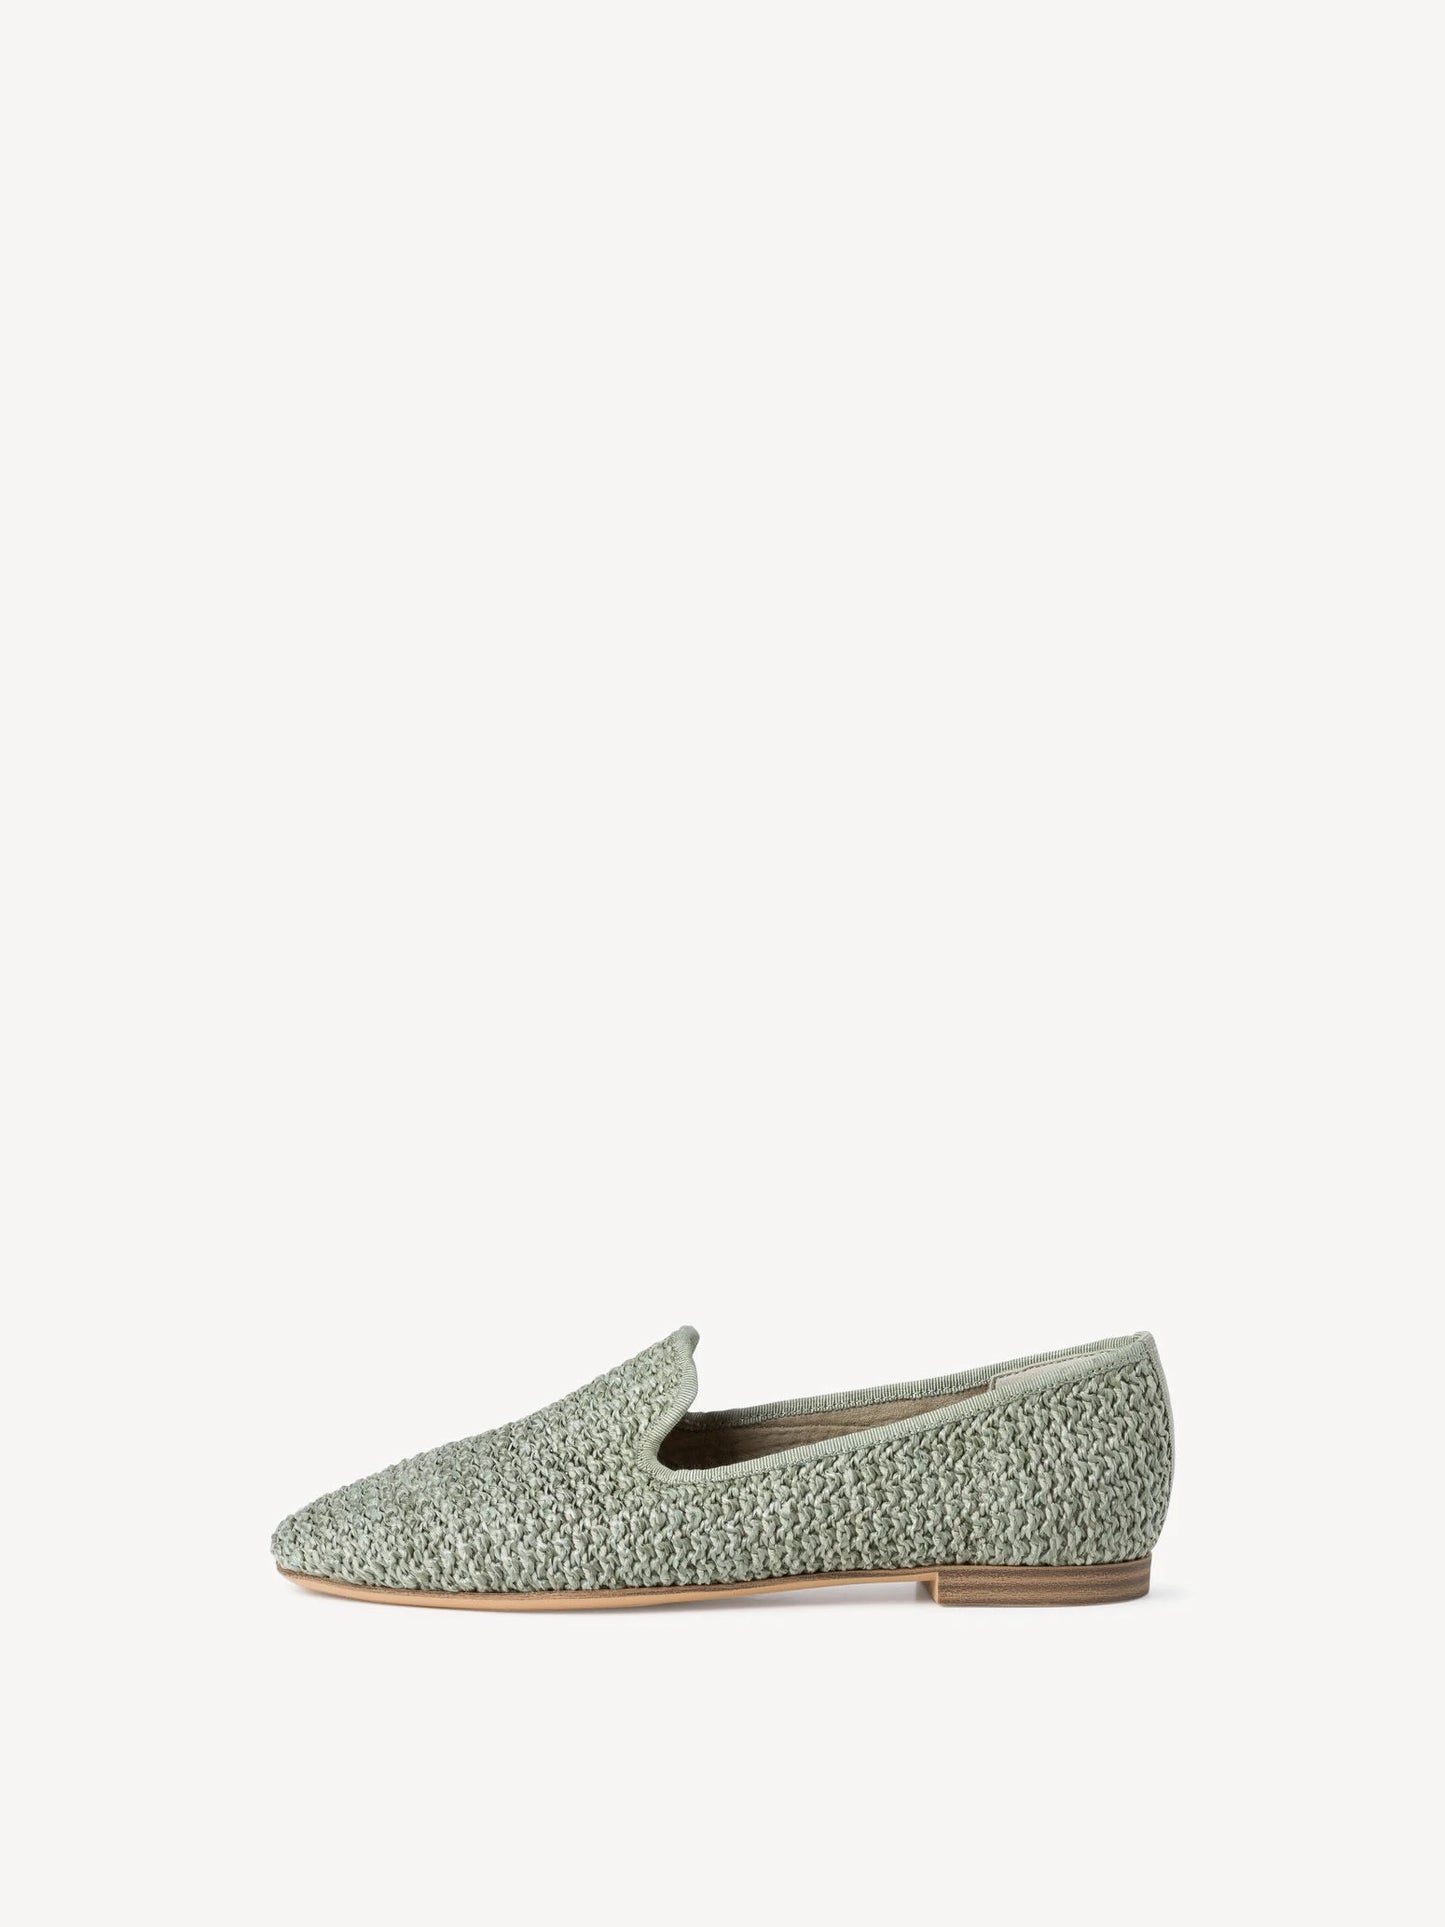 Tamaris Women's 1-24227-36  Slipper Loafer Shoes Pistacchio Green